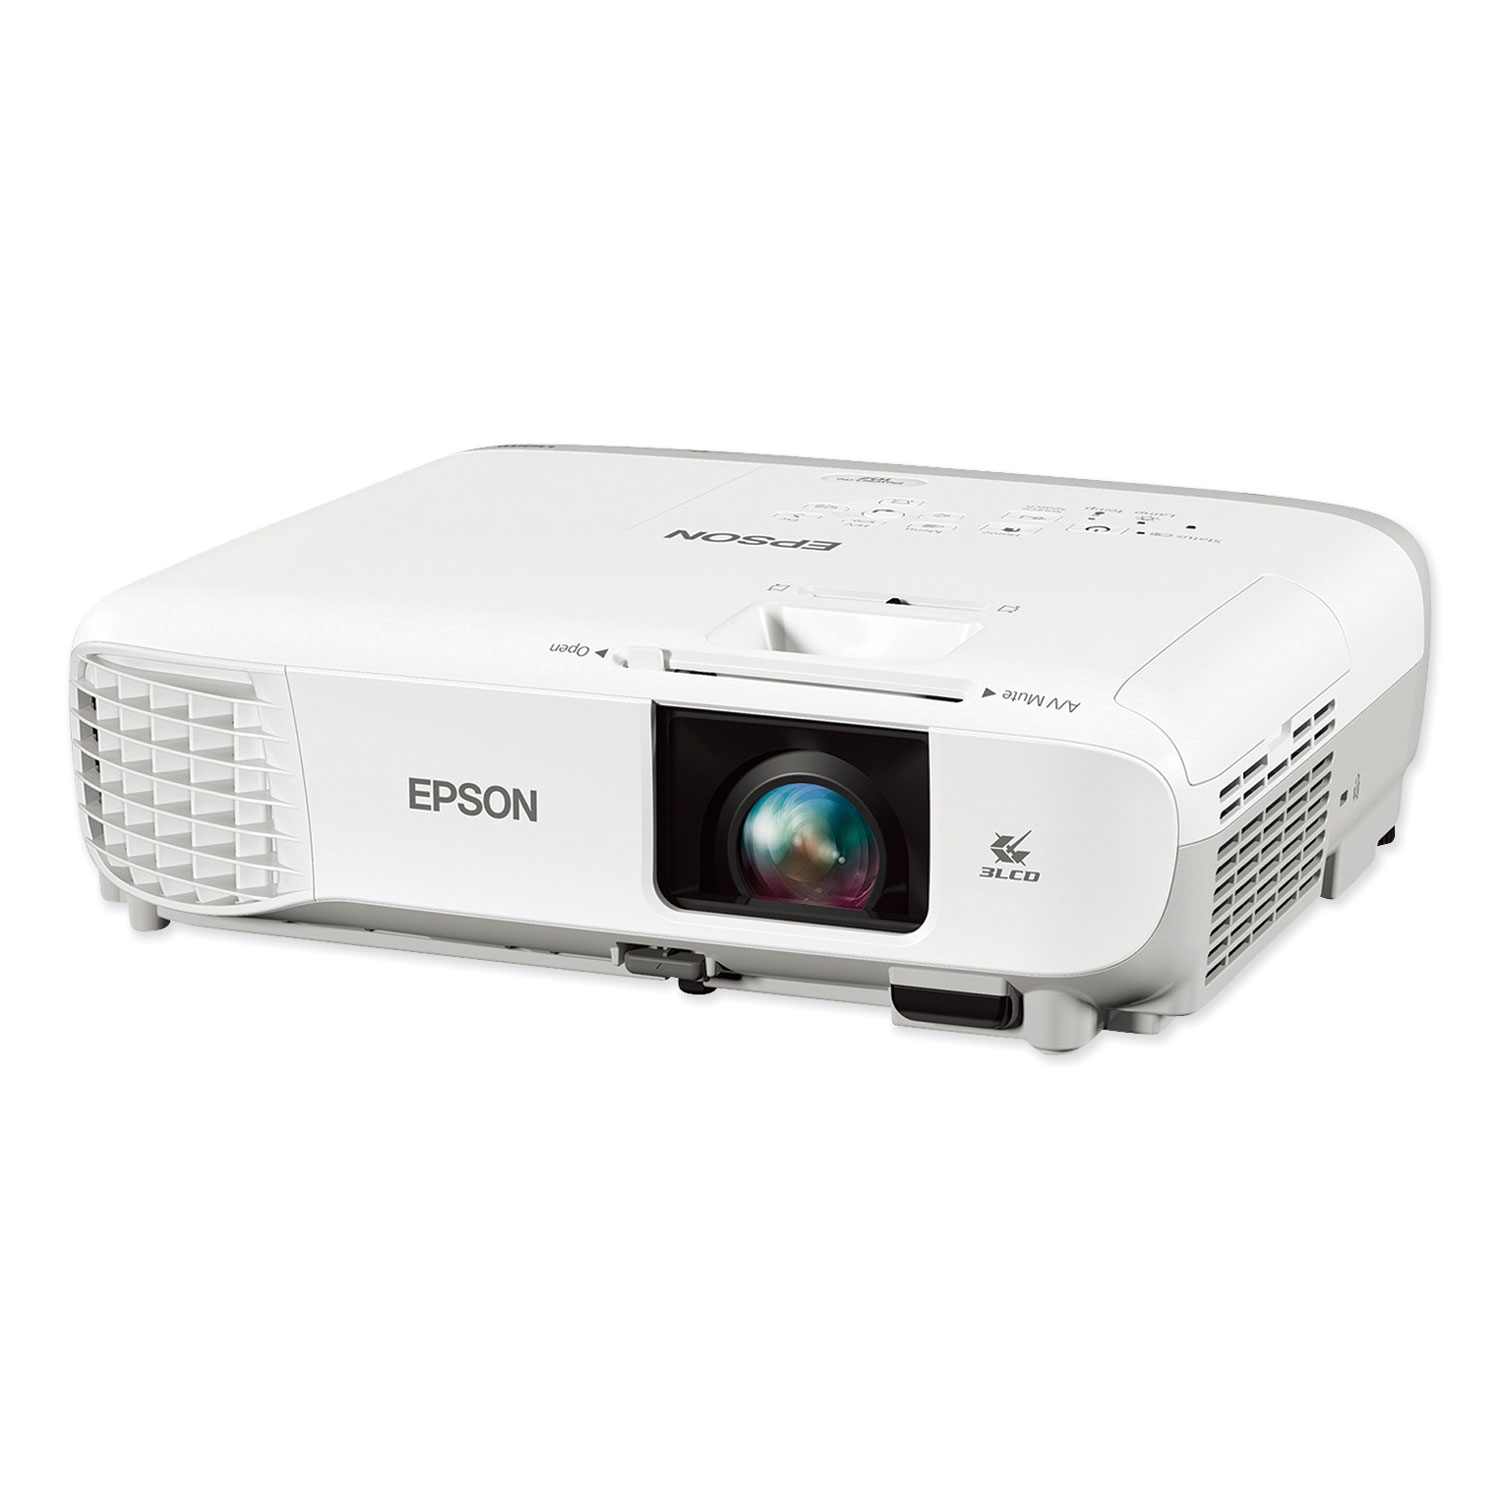  Epson V11H859020 PowerLite 107 XGA 3LCD Projector, 3,500 Lumens, 1024 x 768 Pixels, 1.2x Zoom (EPSV11H859020) 